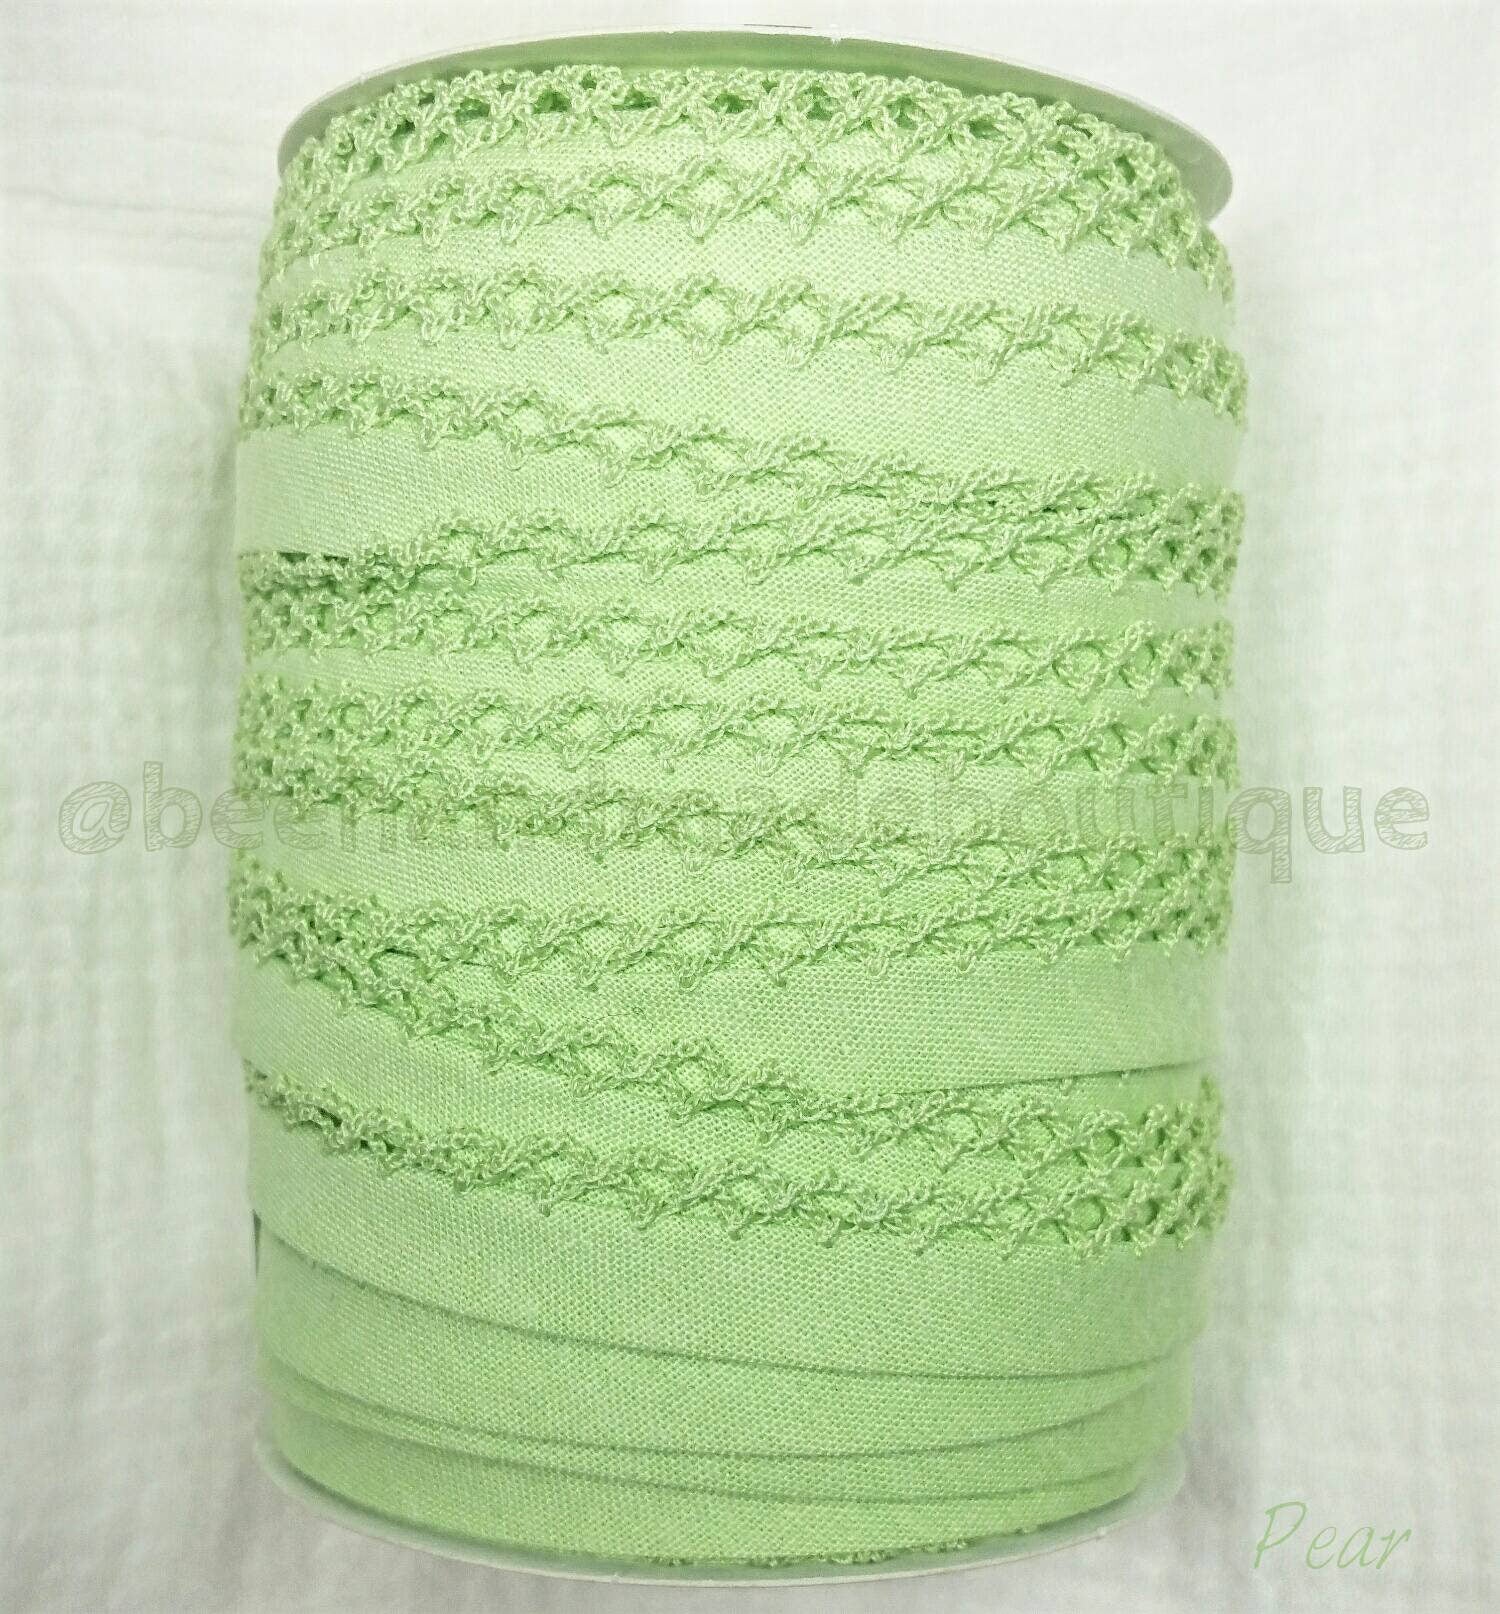 Green Crochet Edge Bias Tape, Double Fold Bias Tape, Picot Edge, Quilt Binding, PEAR GREEN Crochet Bias Tape, By the Yard, Green Lace Bindin